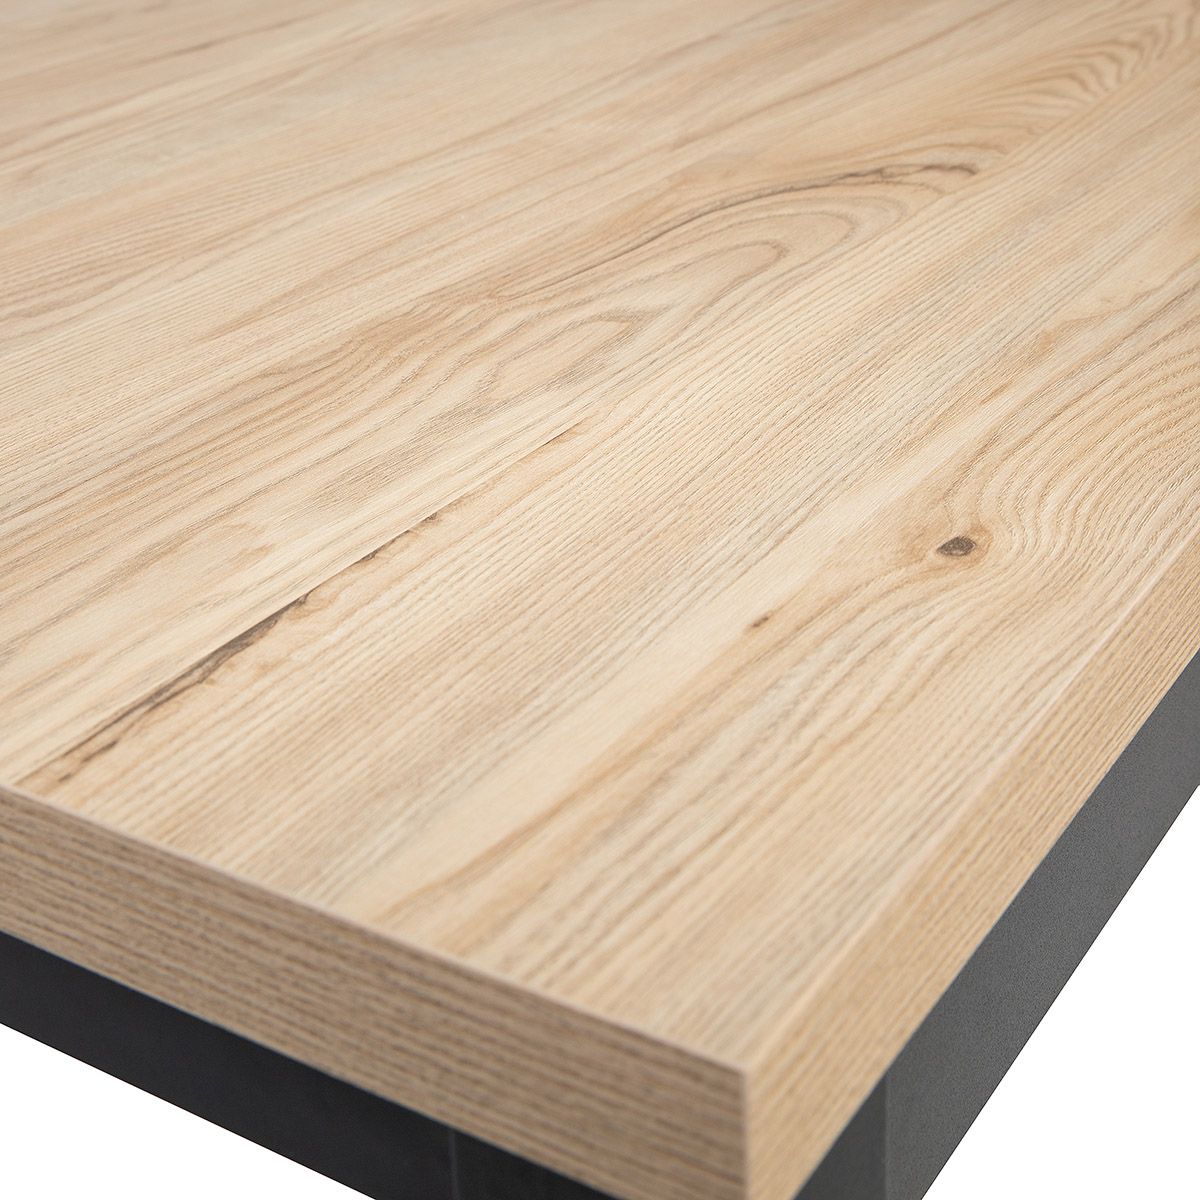 VITO galds taisnstūra galds melnas kājas 160x90cm